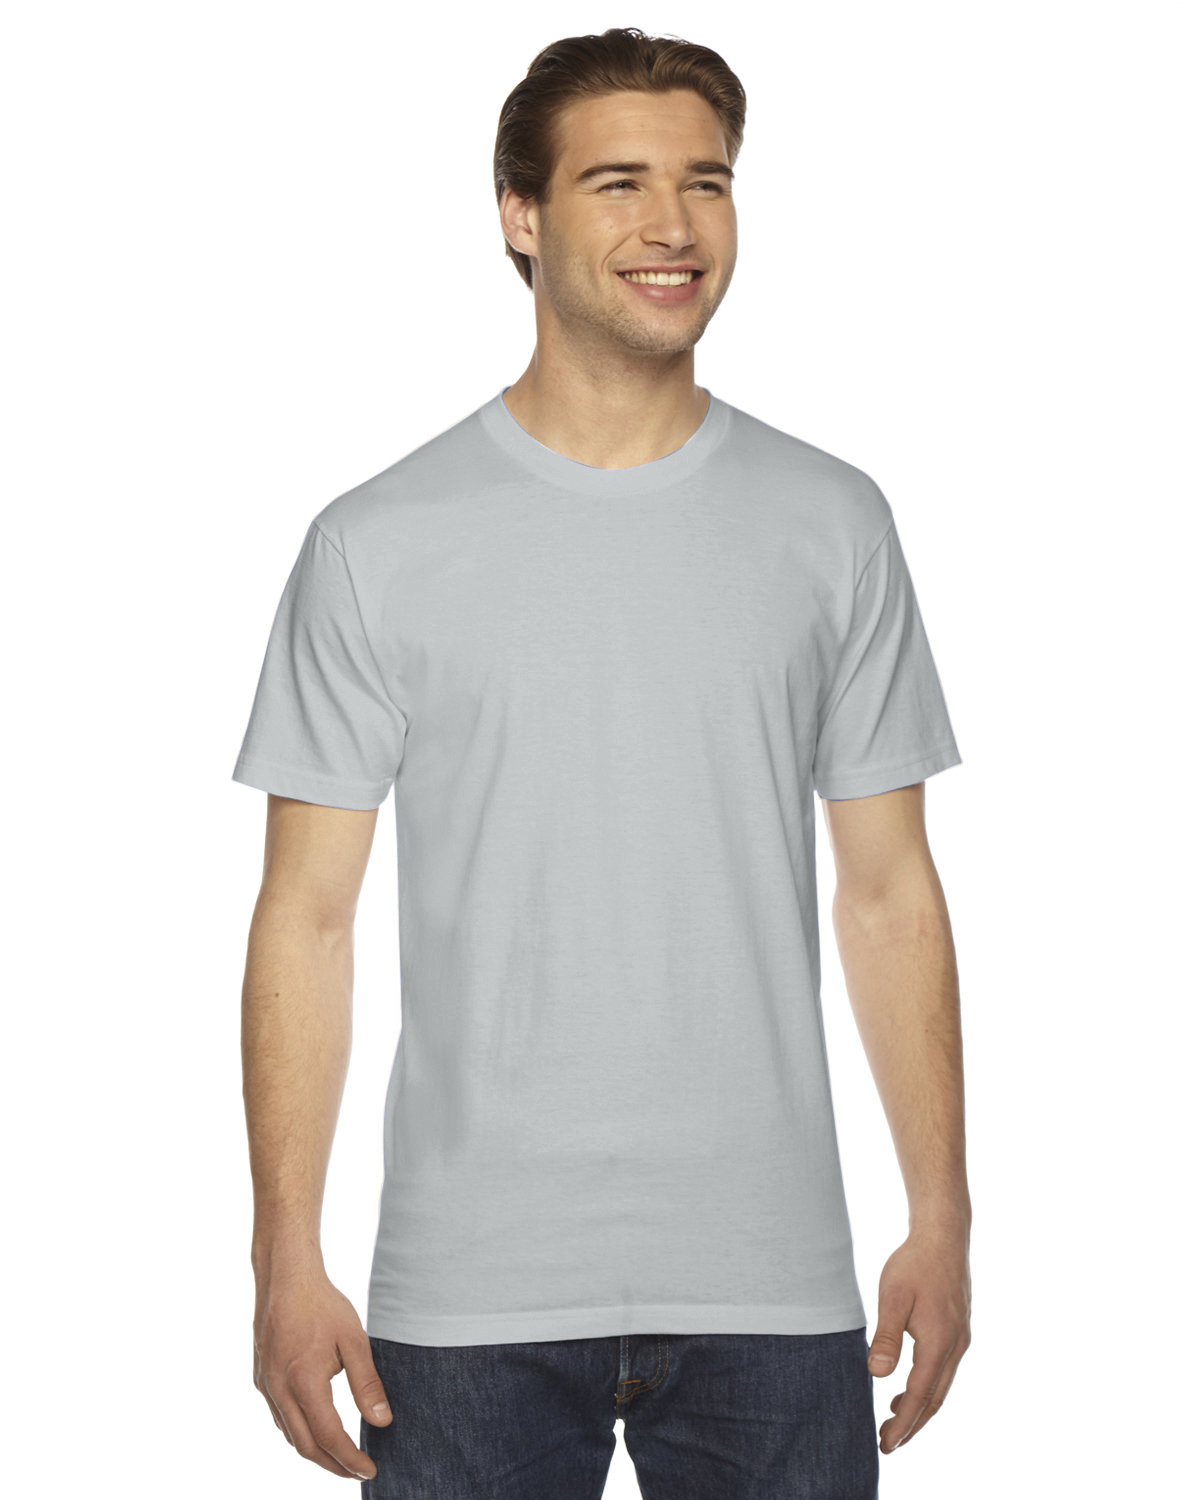 American Apparel Unisex Fine Jersey Short-Sleeve T-Shirt NEW SILVER 